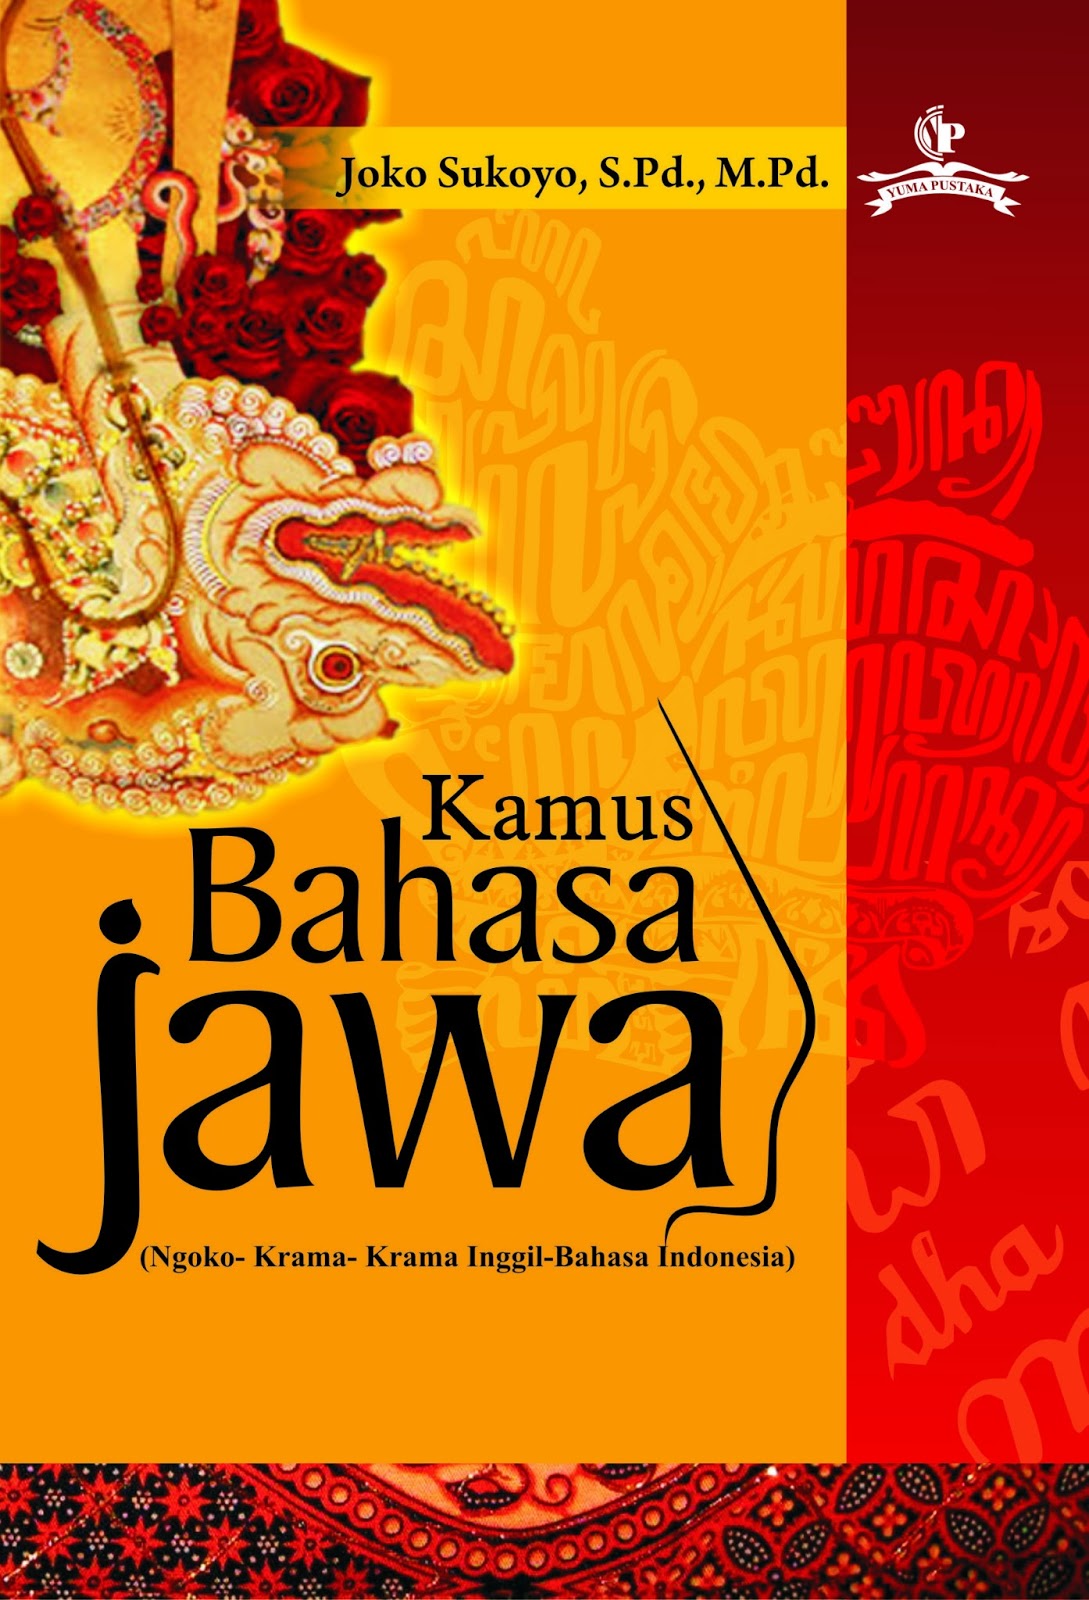 YUMA PUSTAKA: Kamus Bahasa Jawa